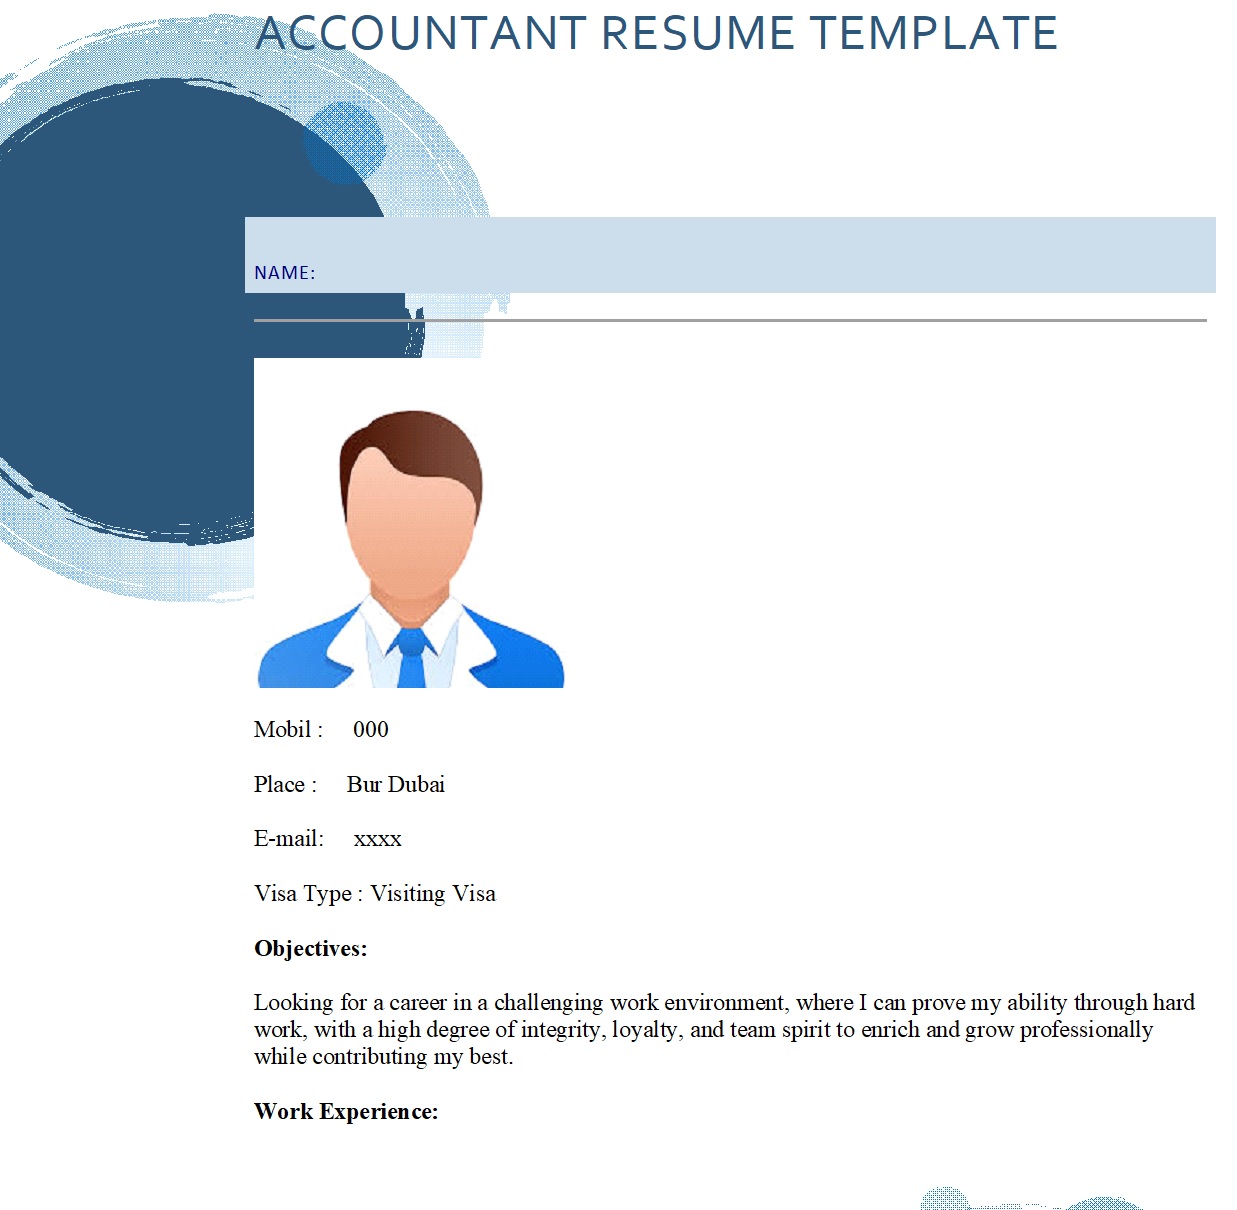 Basic Accountant Resume Template